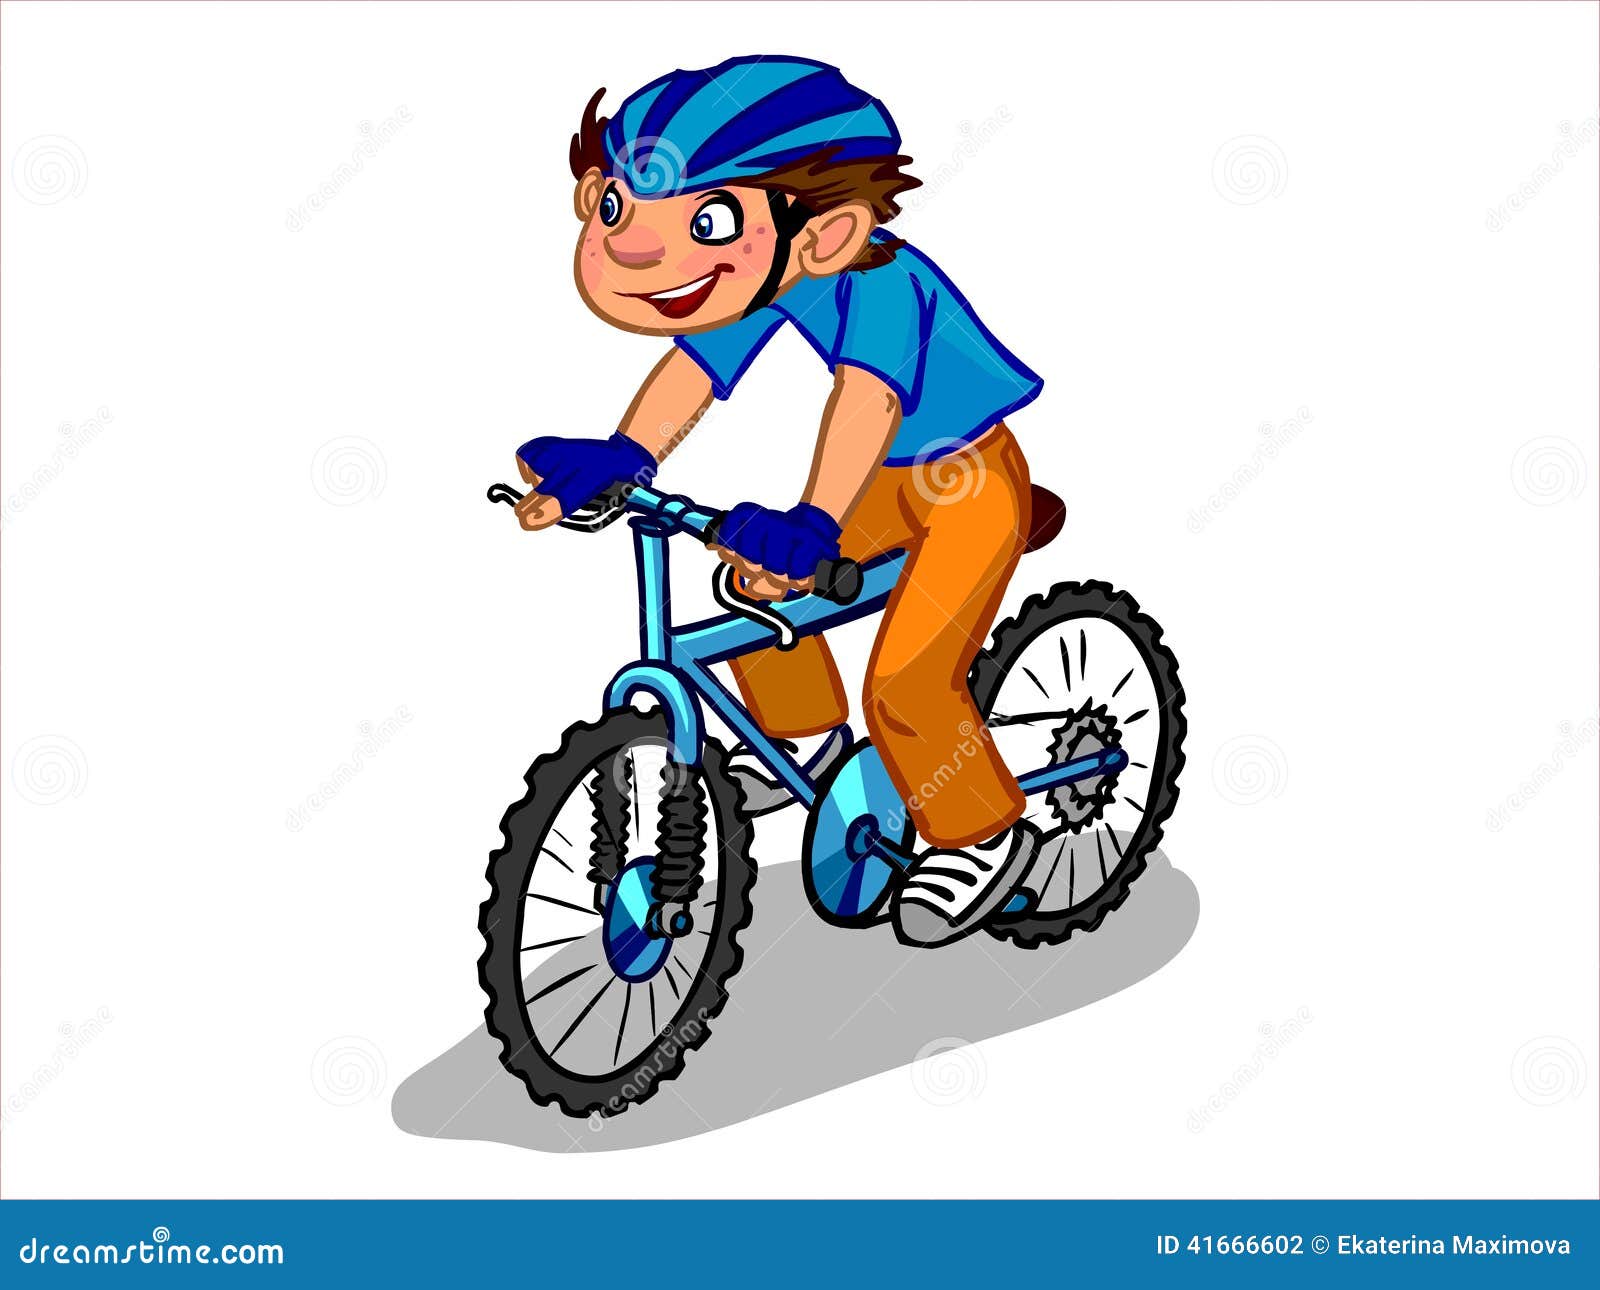 boy riding a bike clipart - photo #28